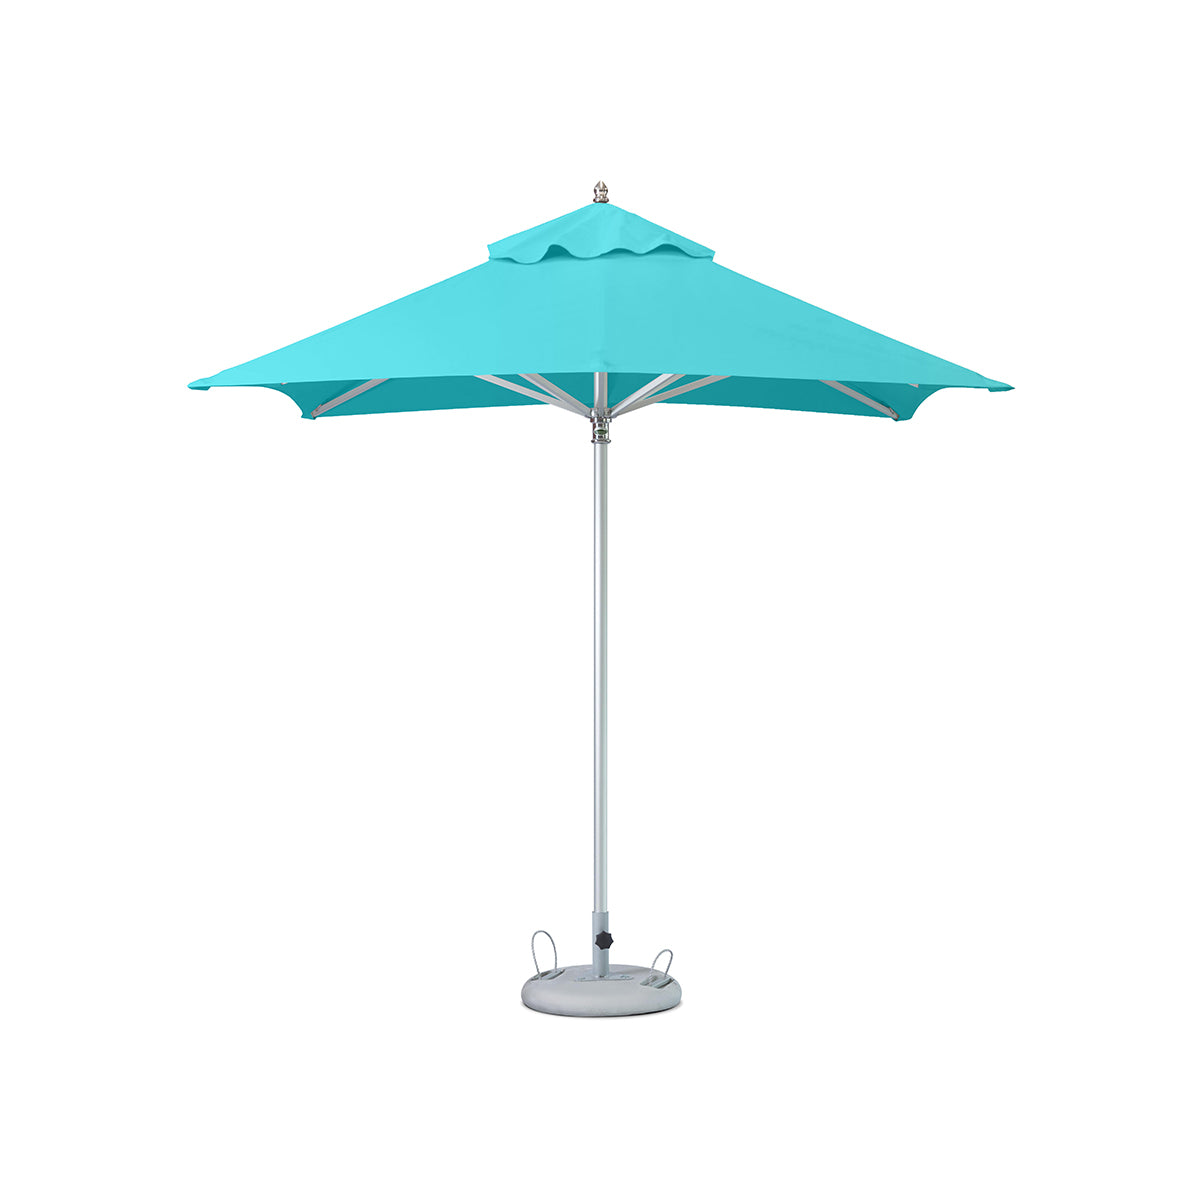 Teal Outdoor Umbrella